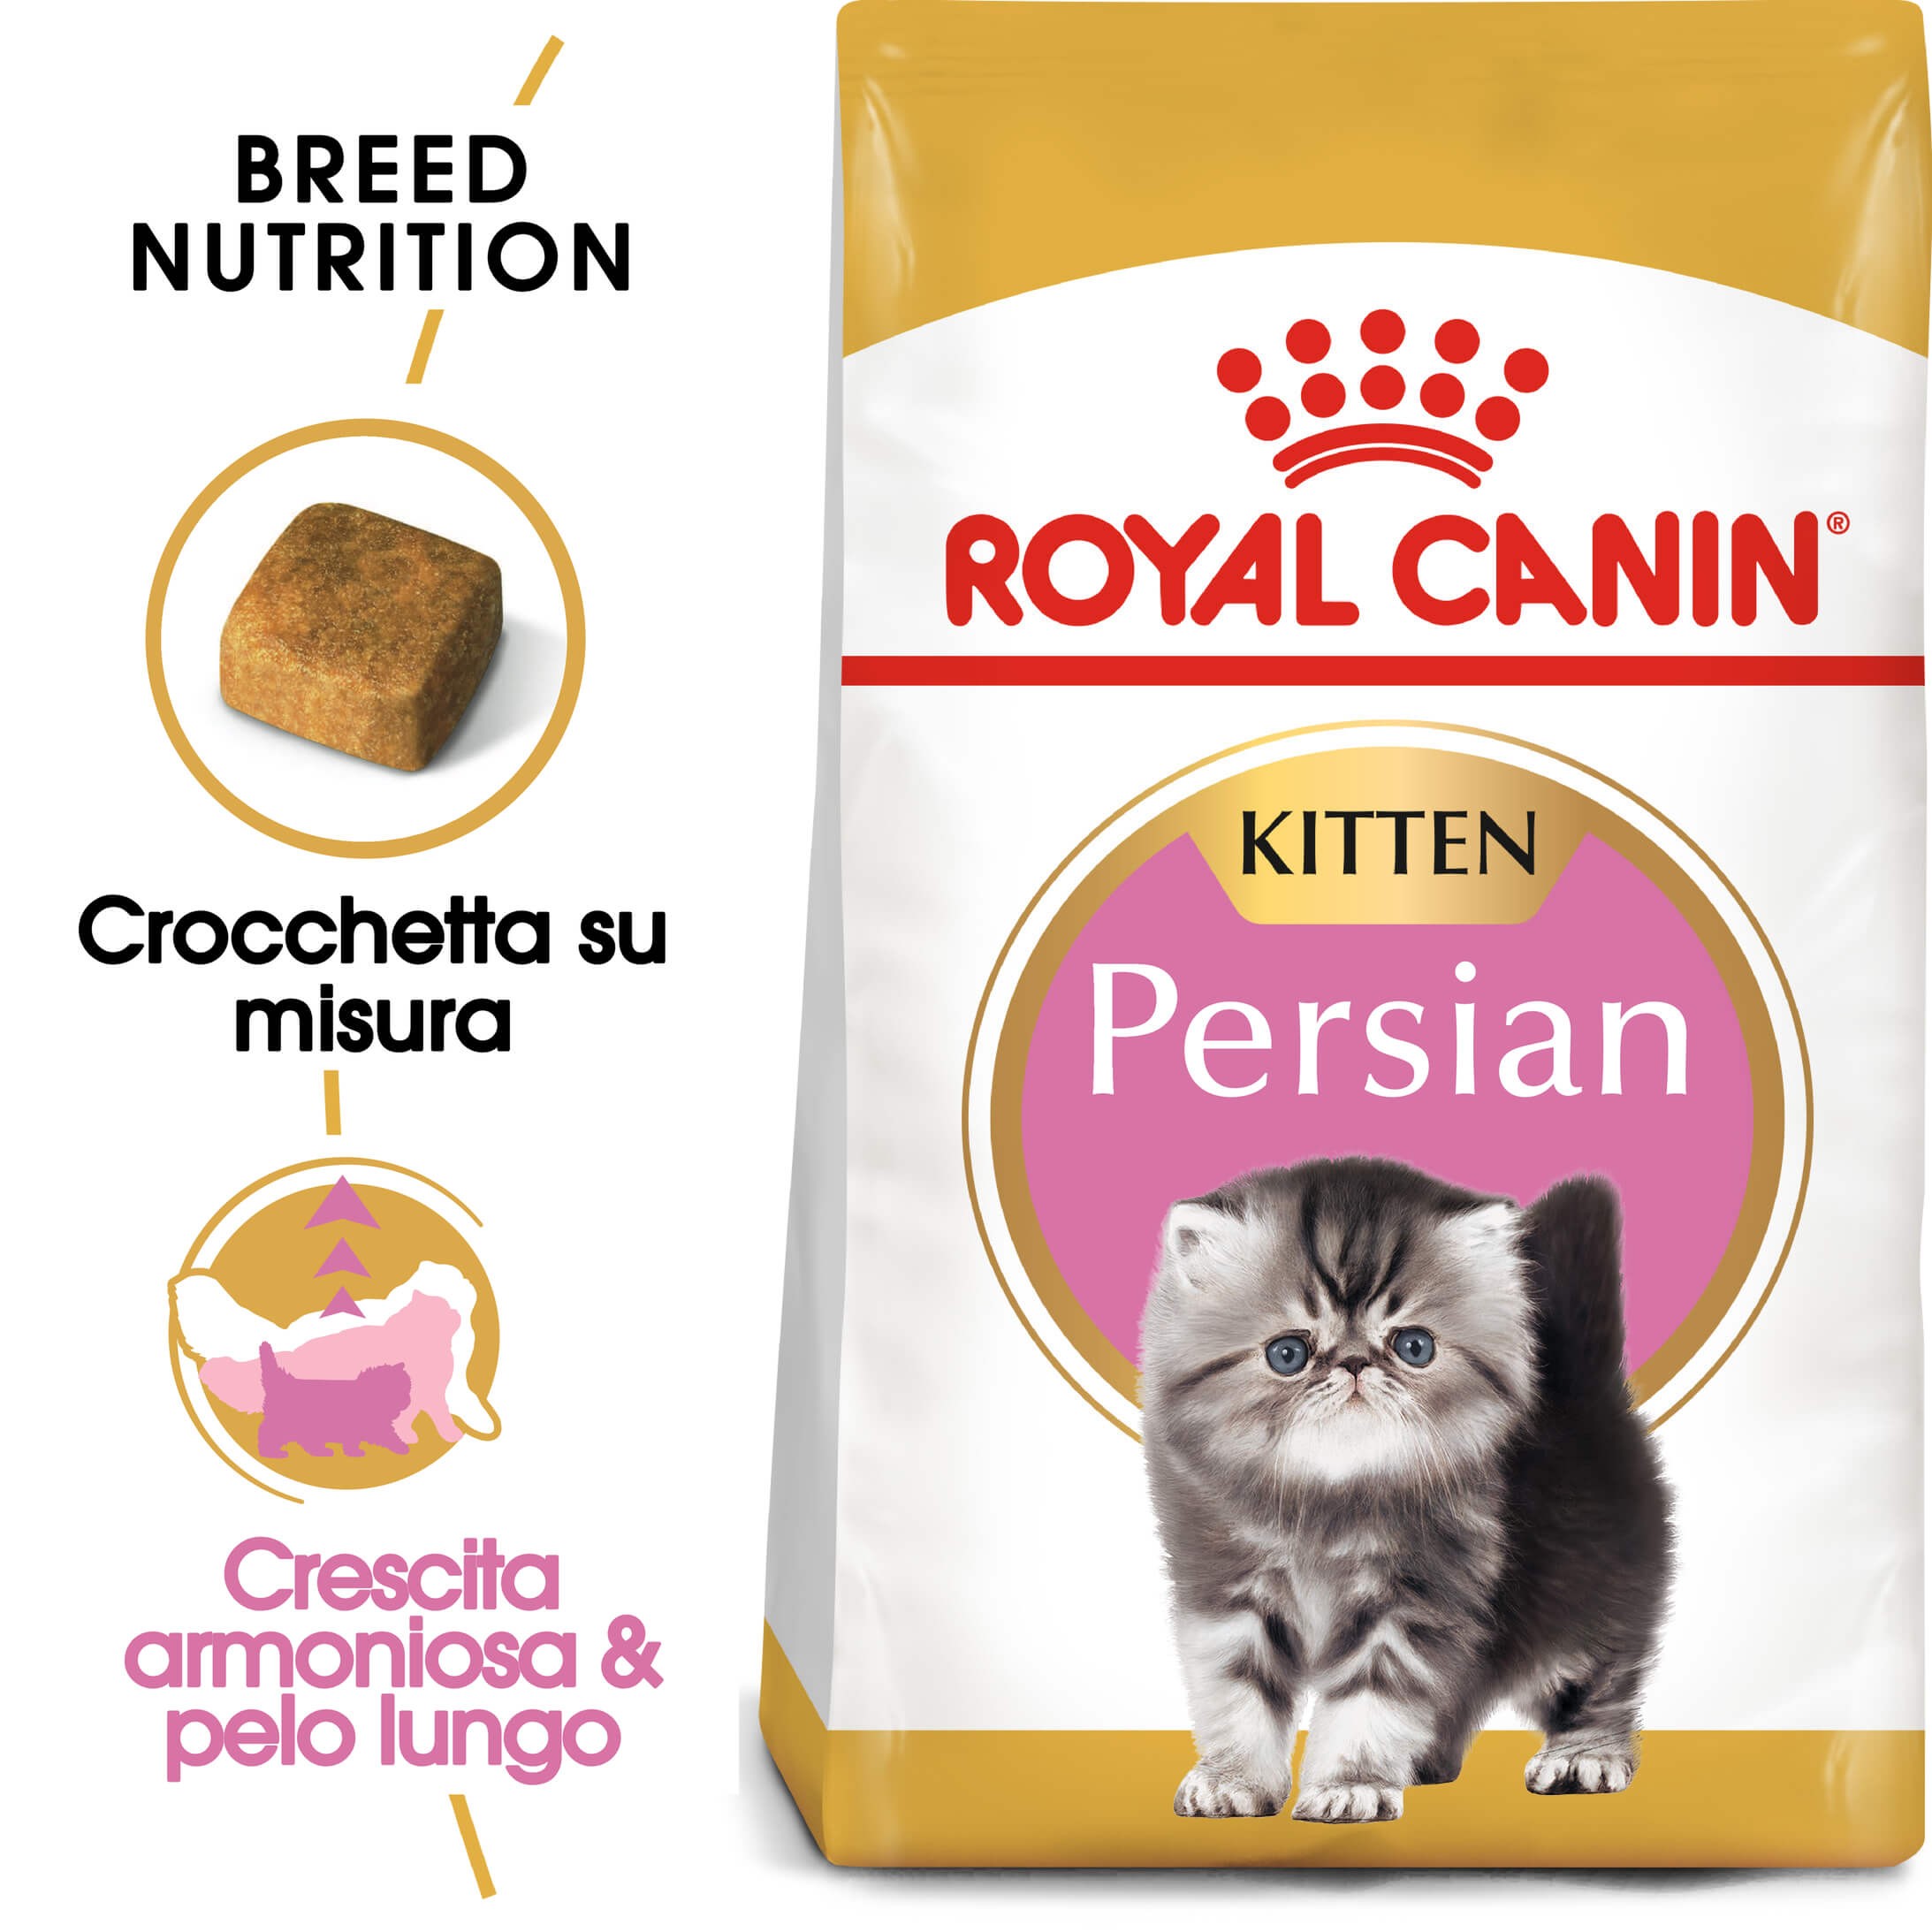 Royal Canin gattino Persiano